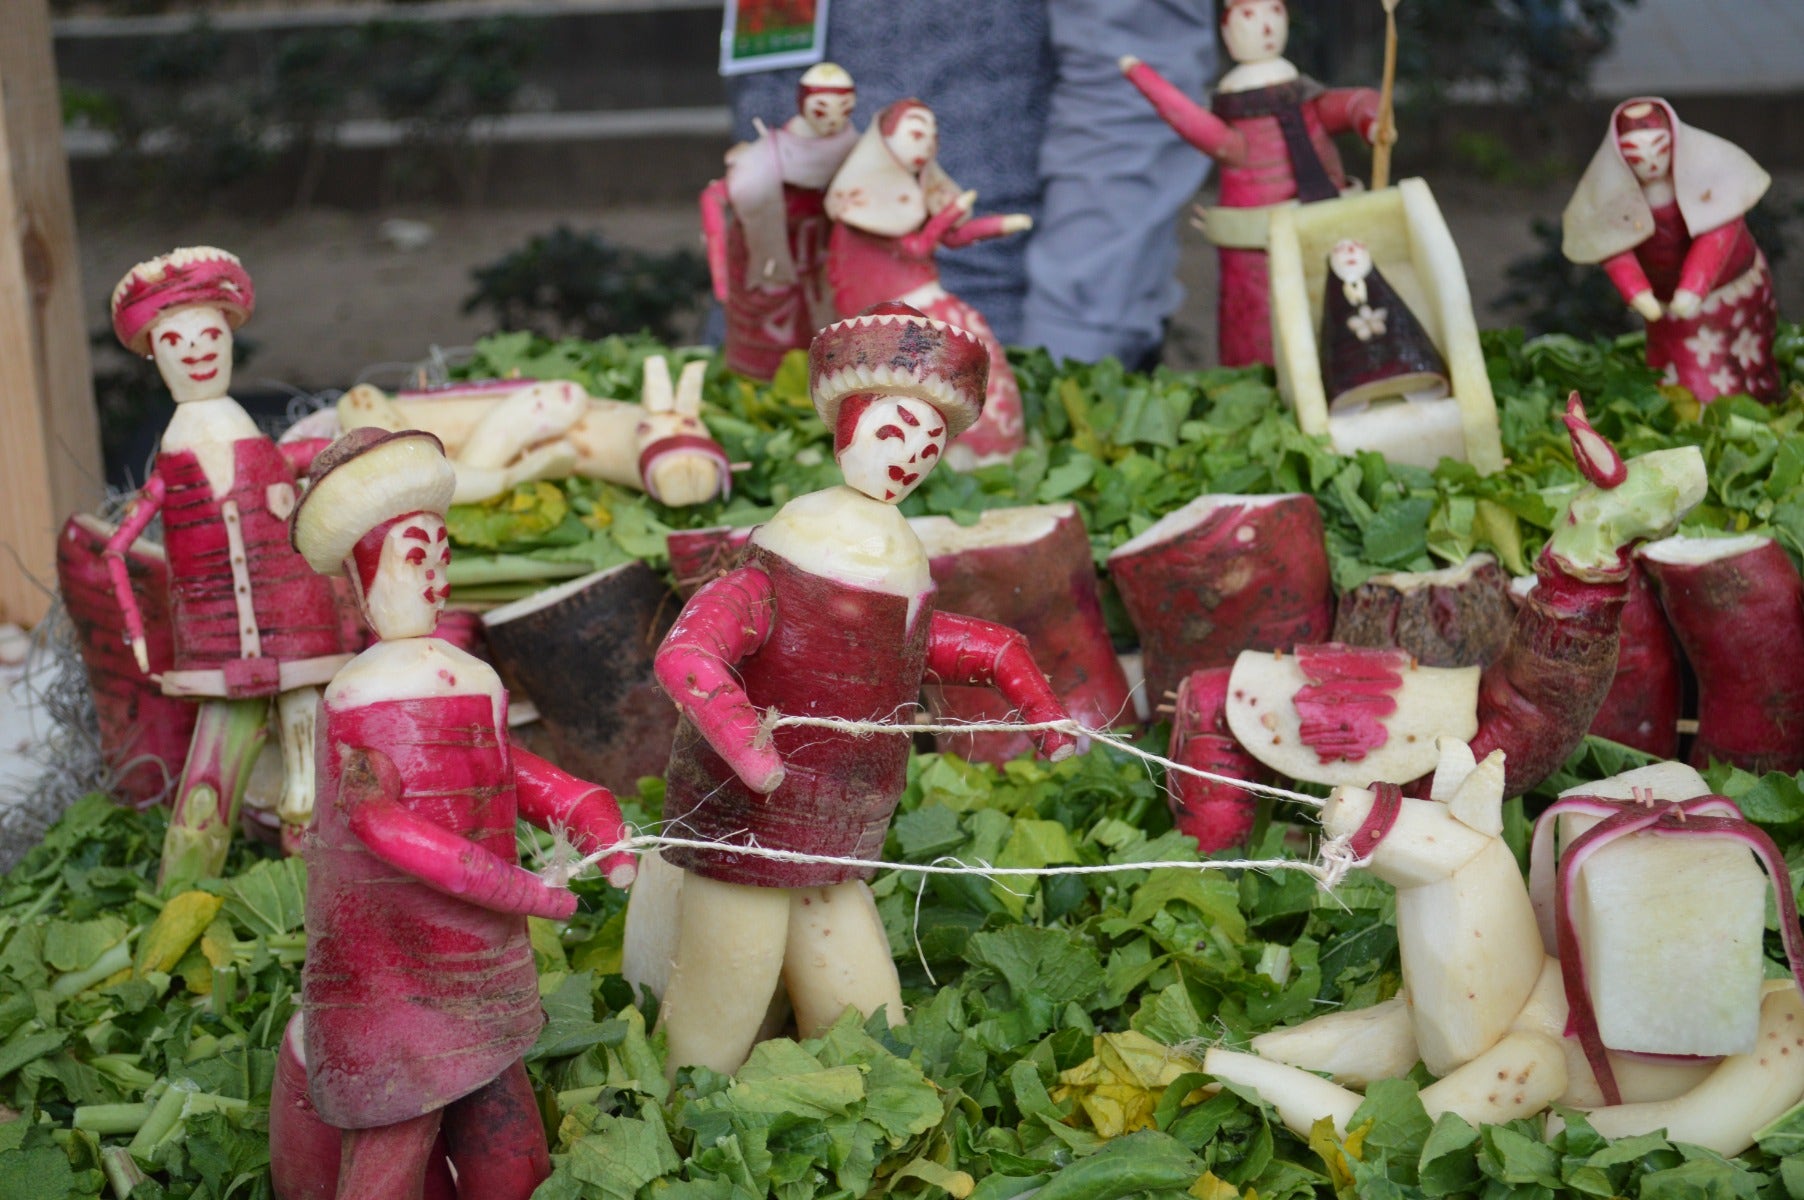 Winter radish sculptures at the Radishes Festival